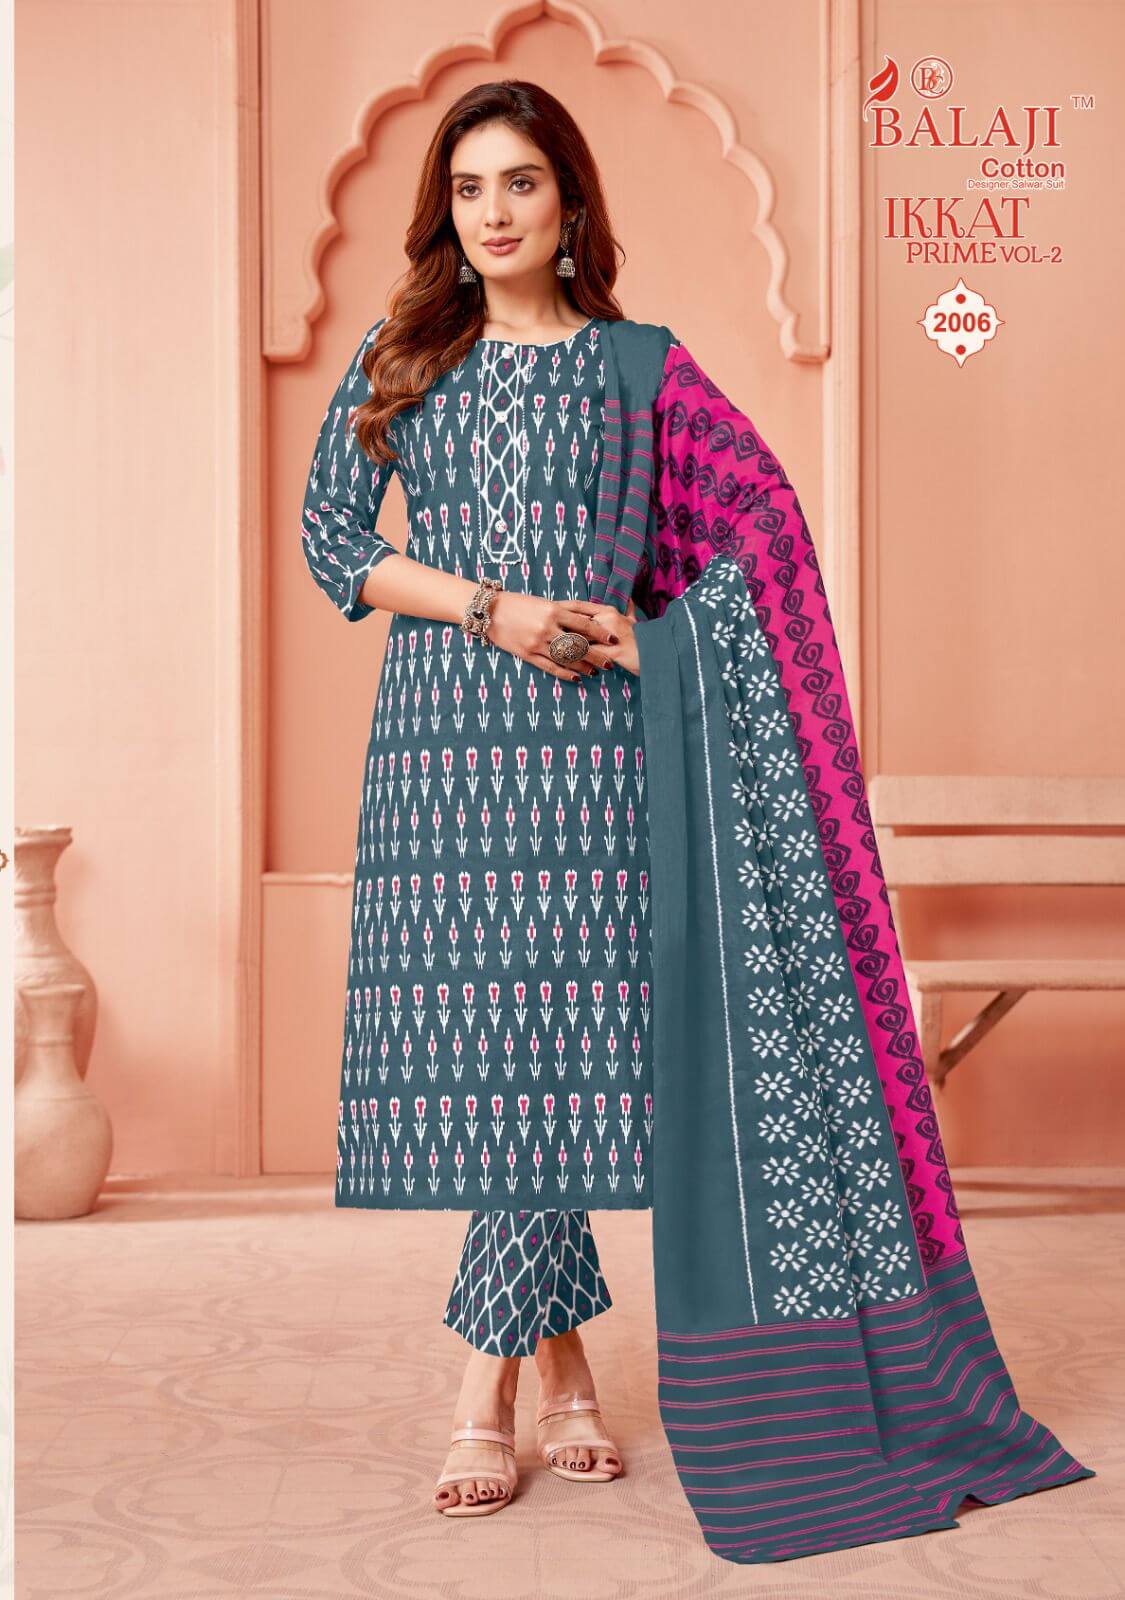 Balaji Cotton Ikkat Prime Vol 2 Readymade Dress Catalog collection 8